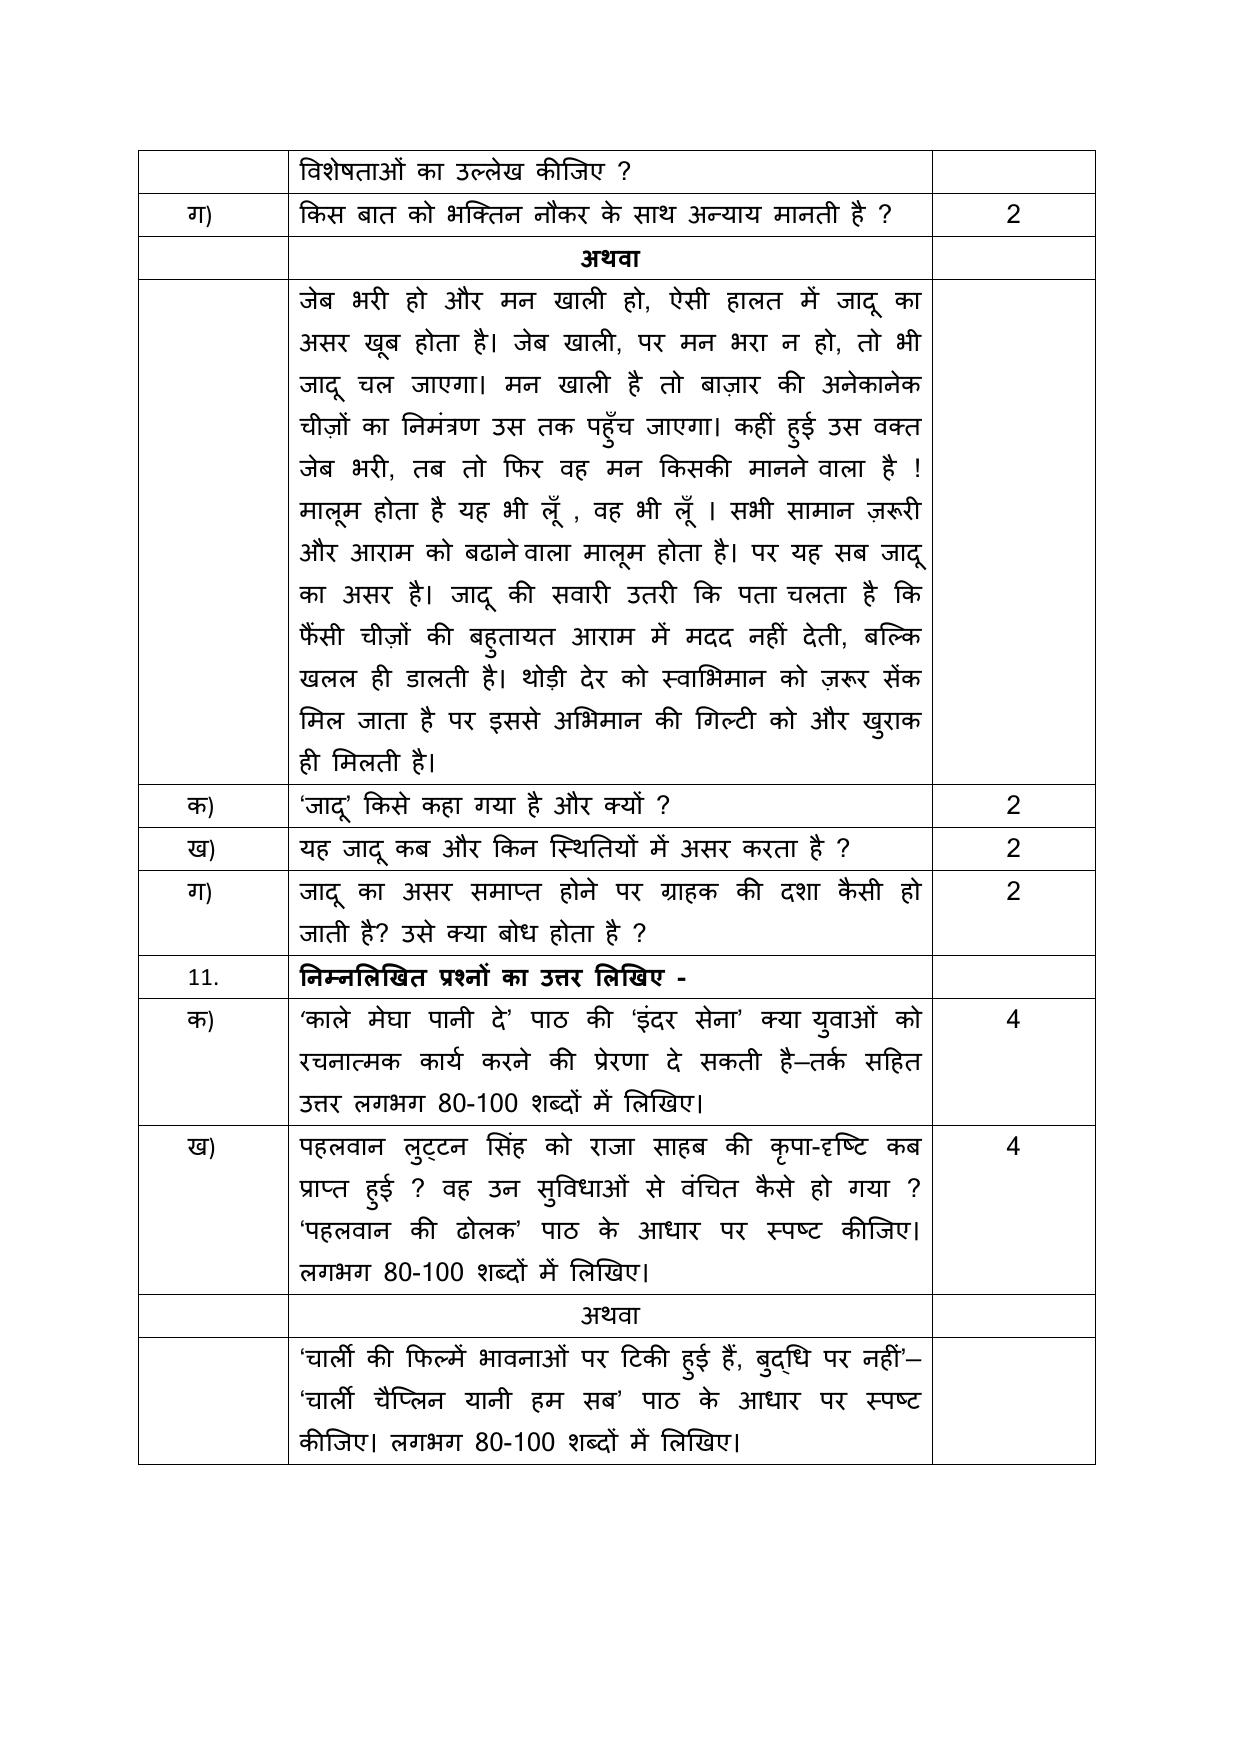 CBSE Class 12 Hindi Adhaar -Sample Paper 2019-20 - Page 7